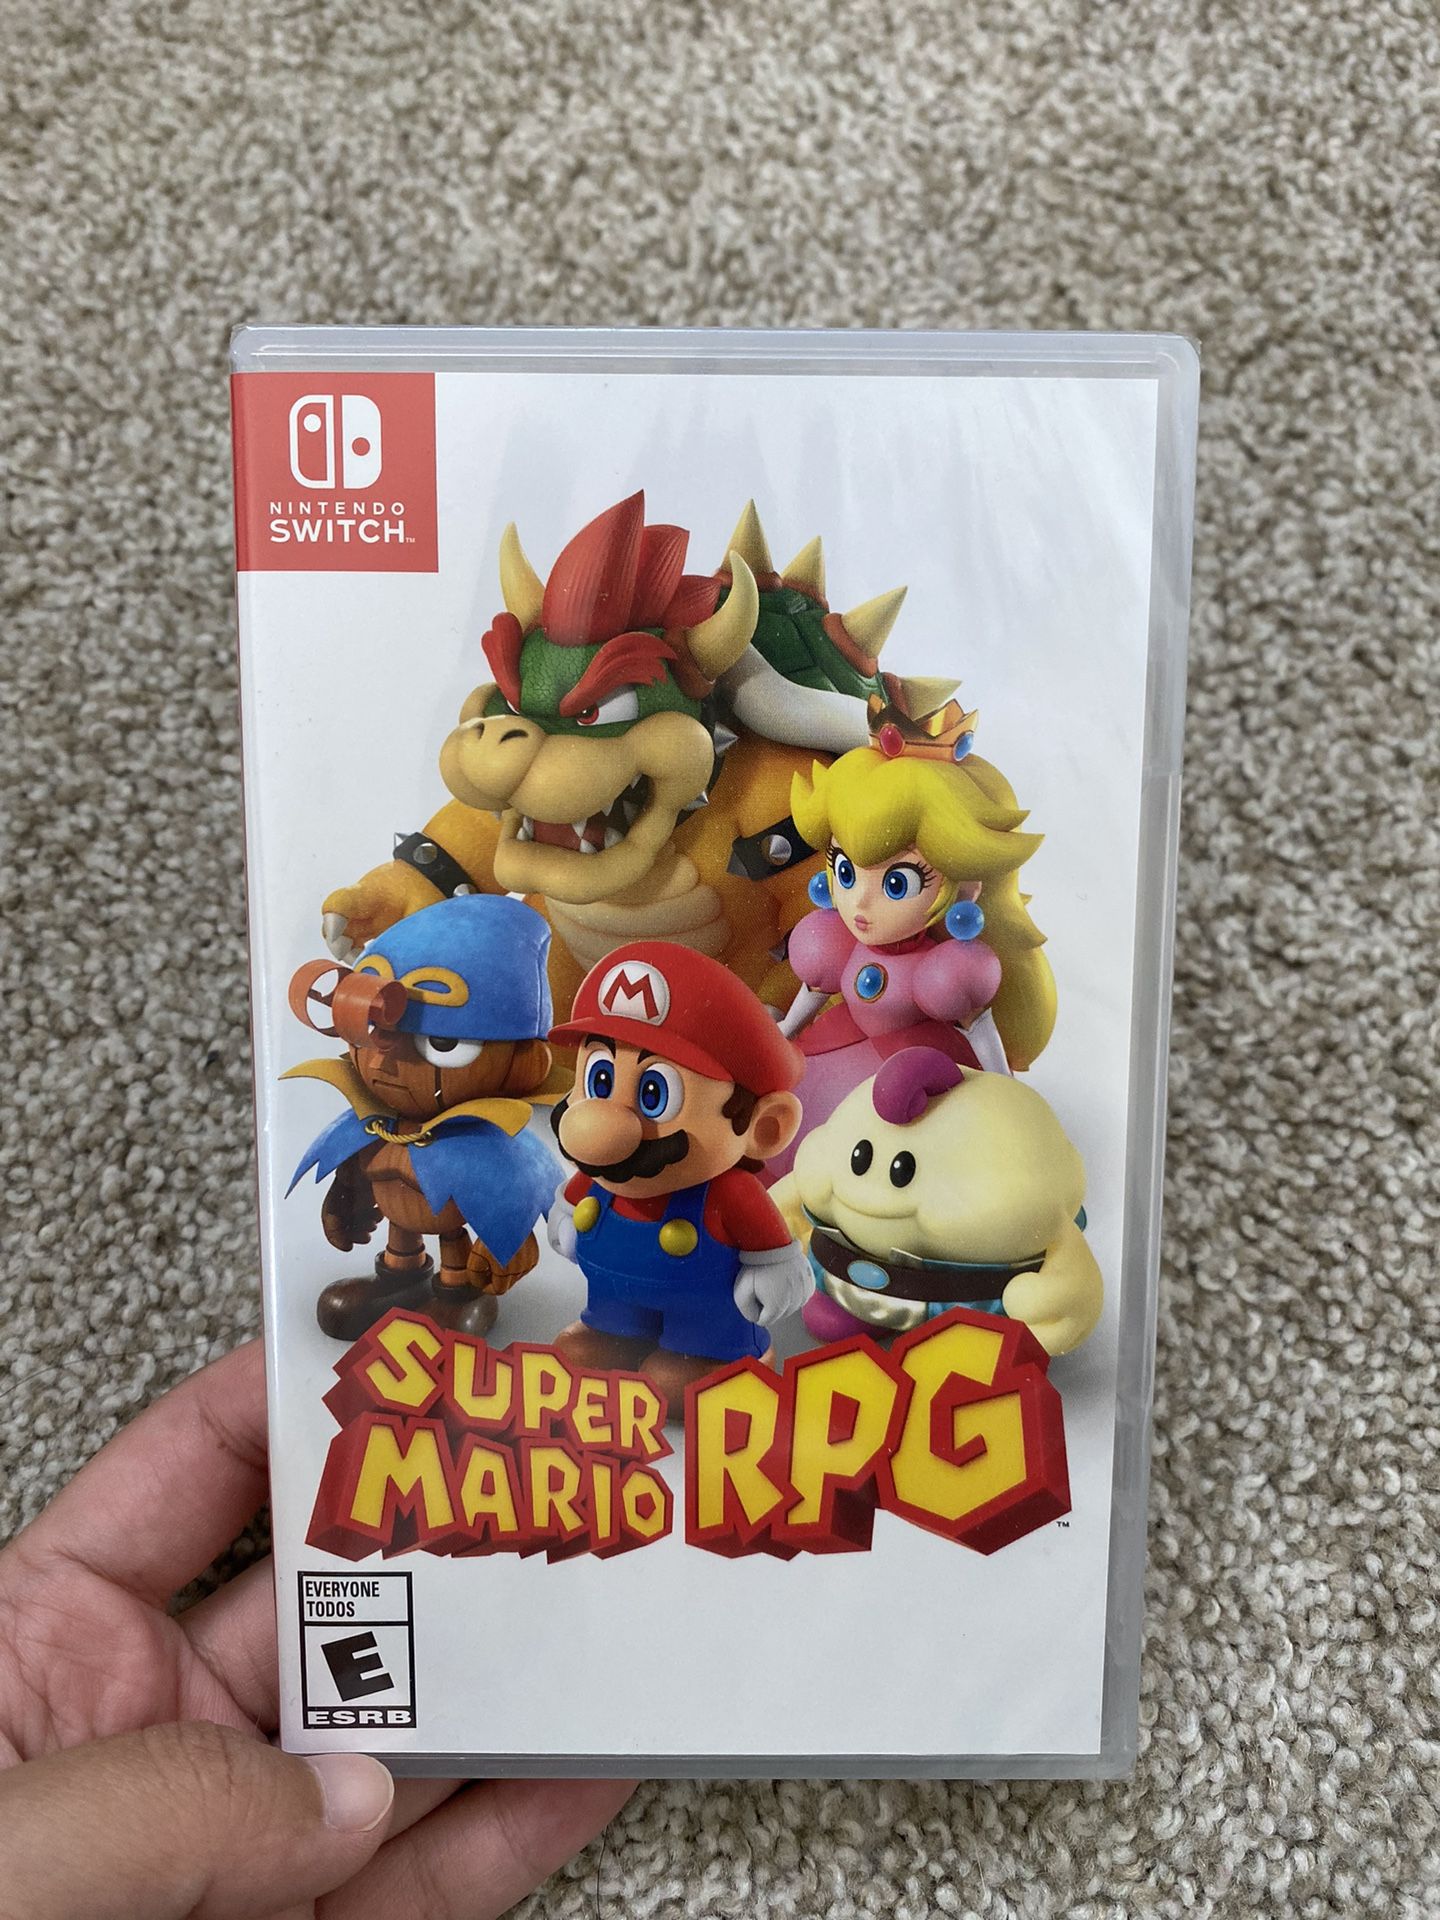 Super Mario RPG - Nintendo Switch - U.S. Edition brand new